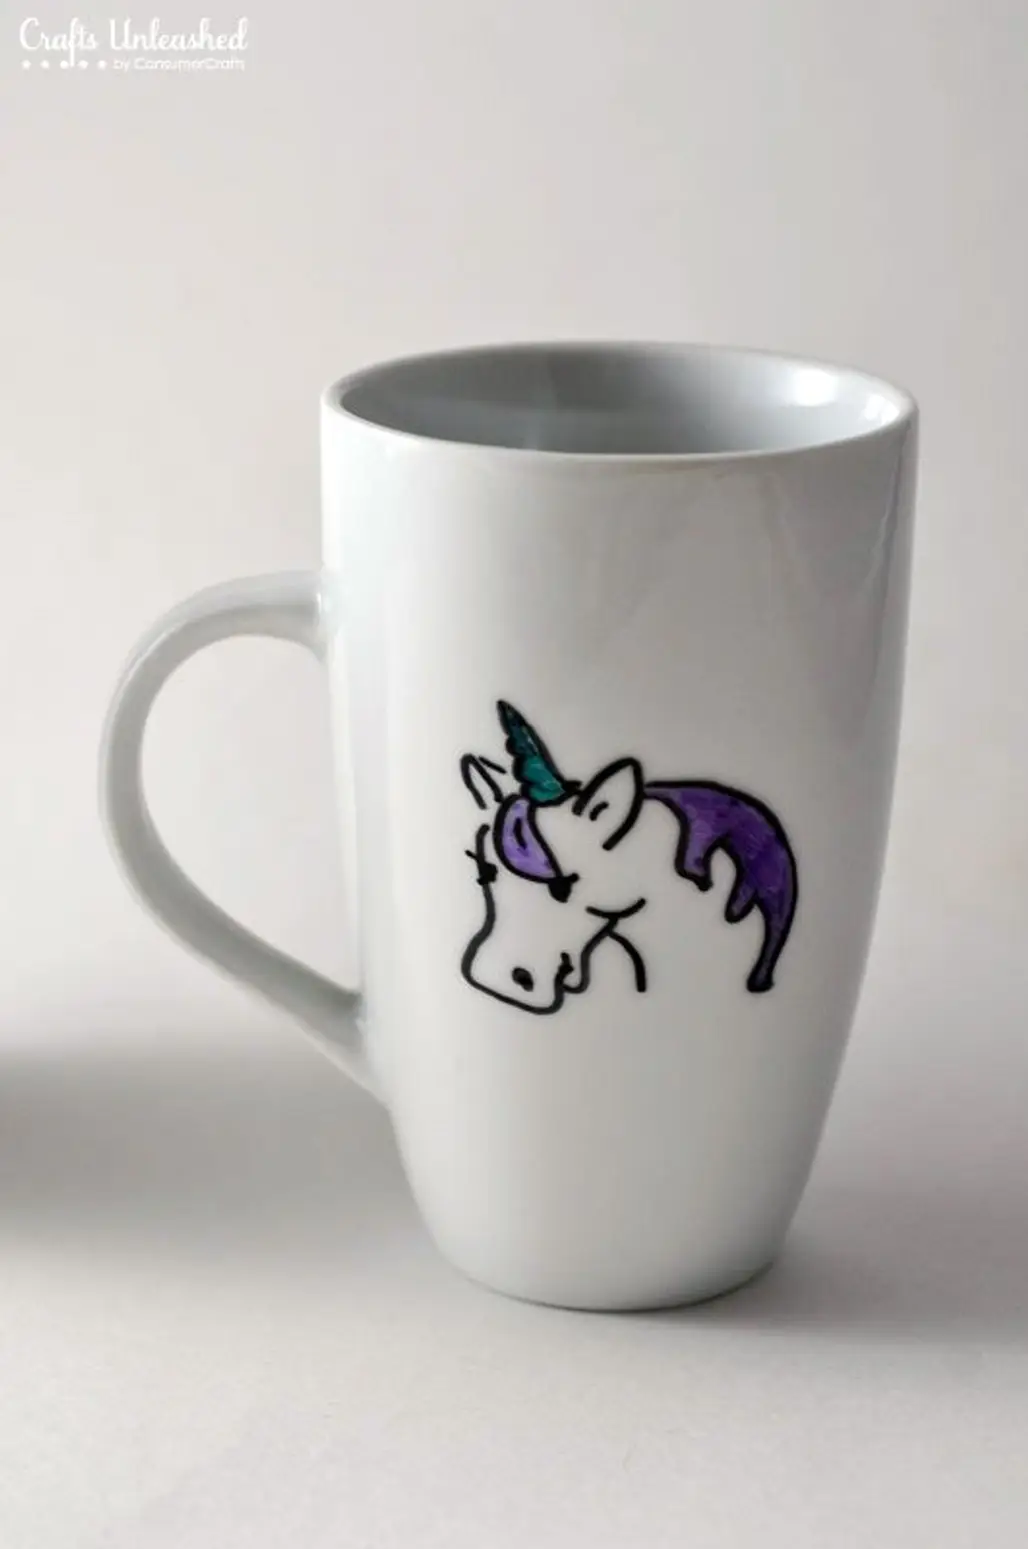 Coffee is for Unicorns